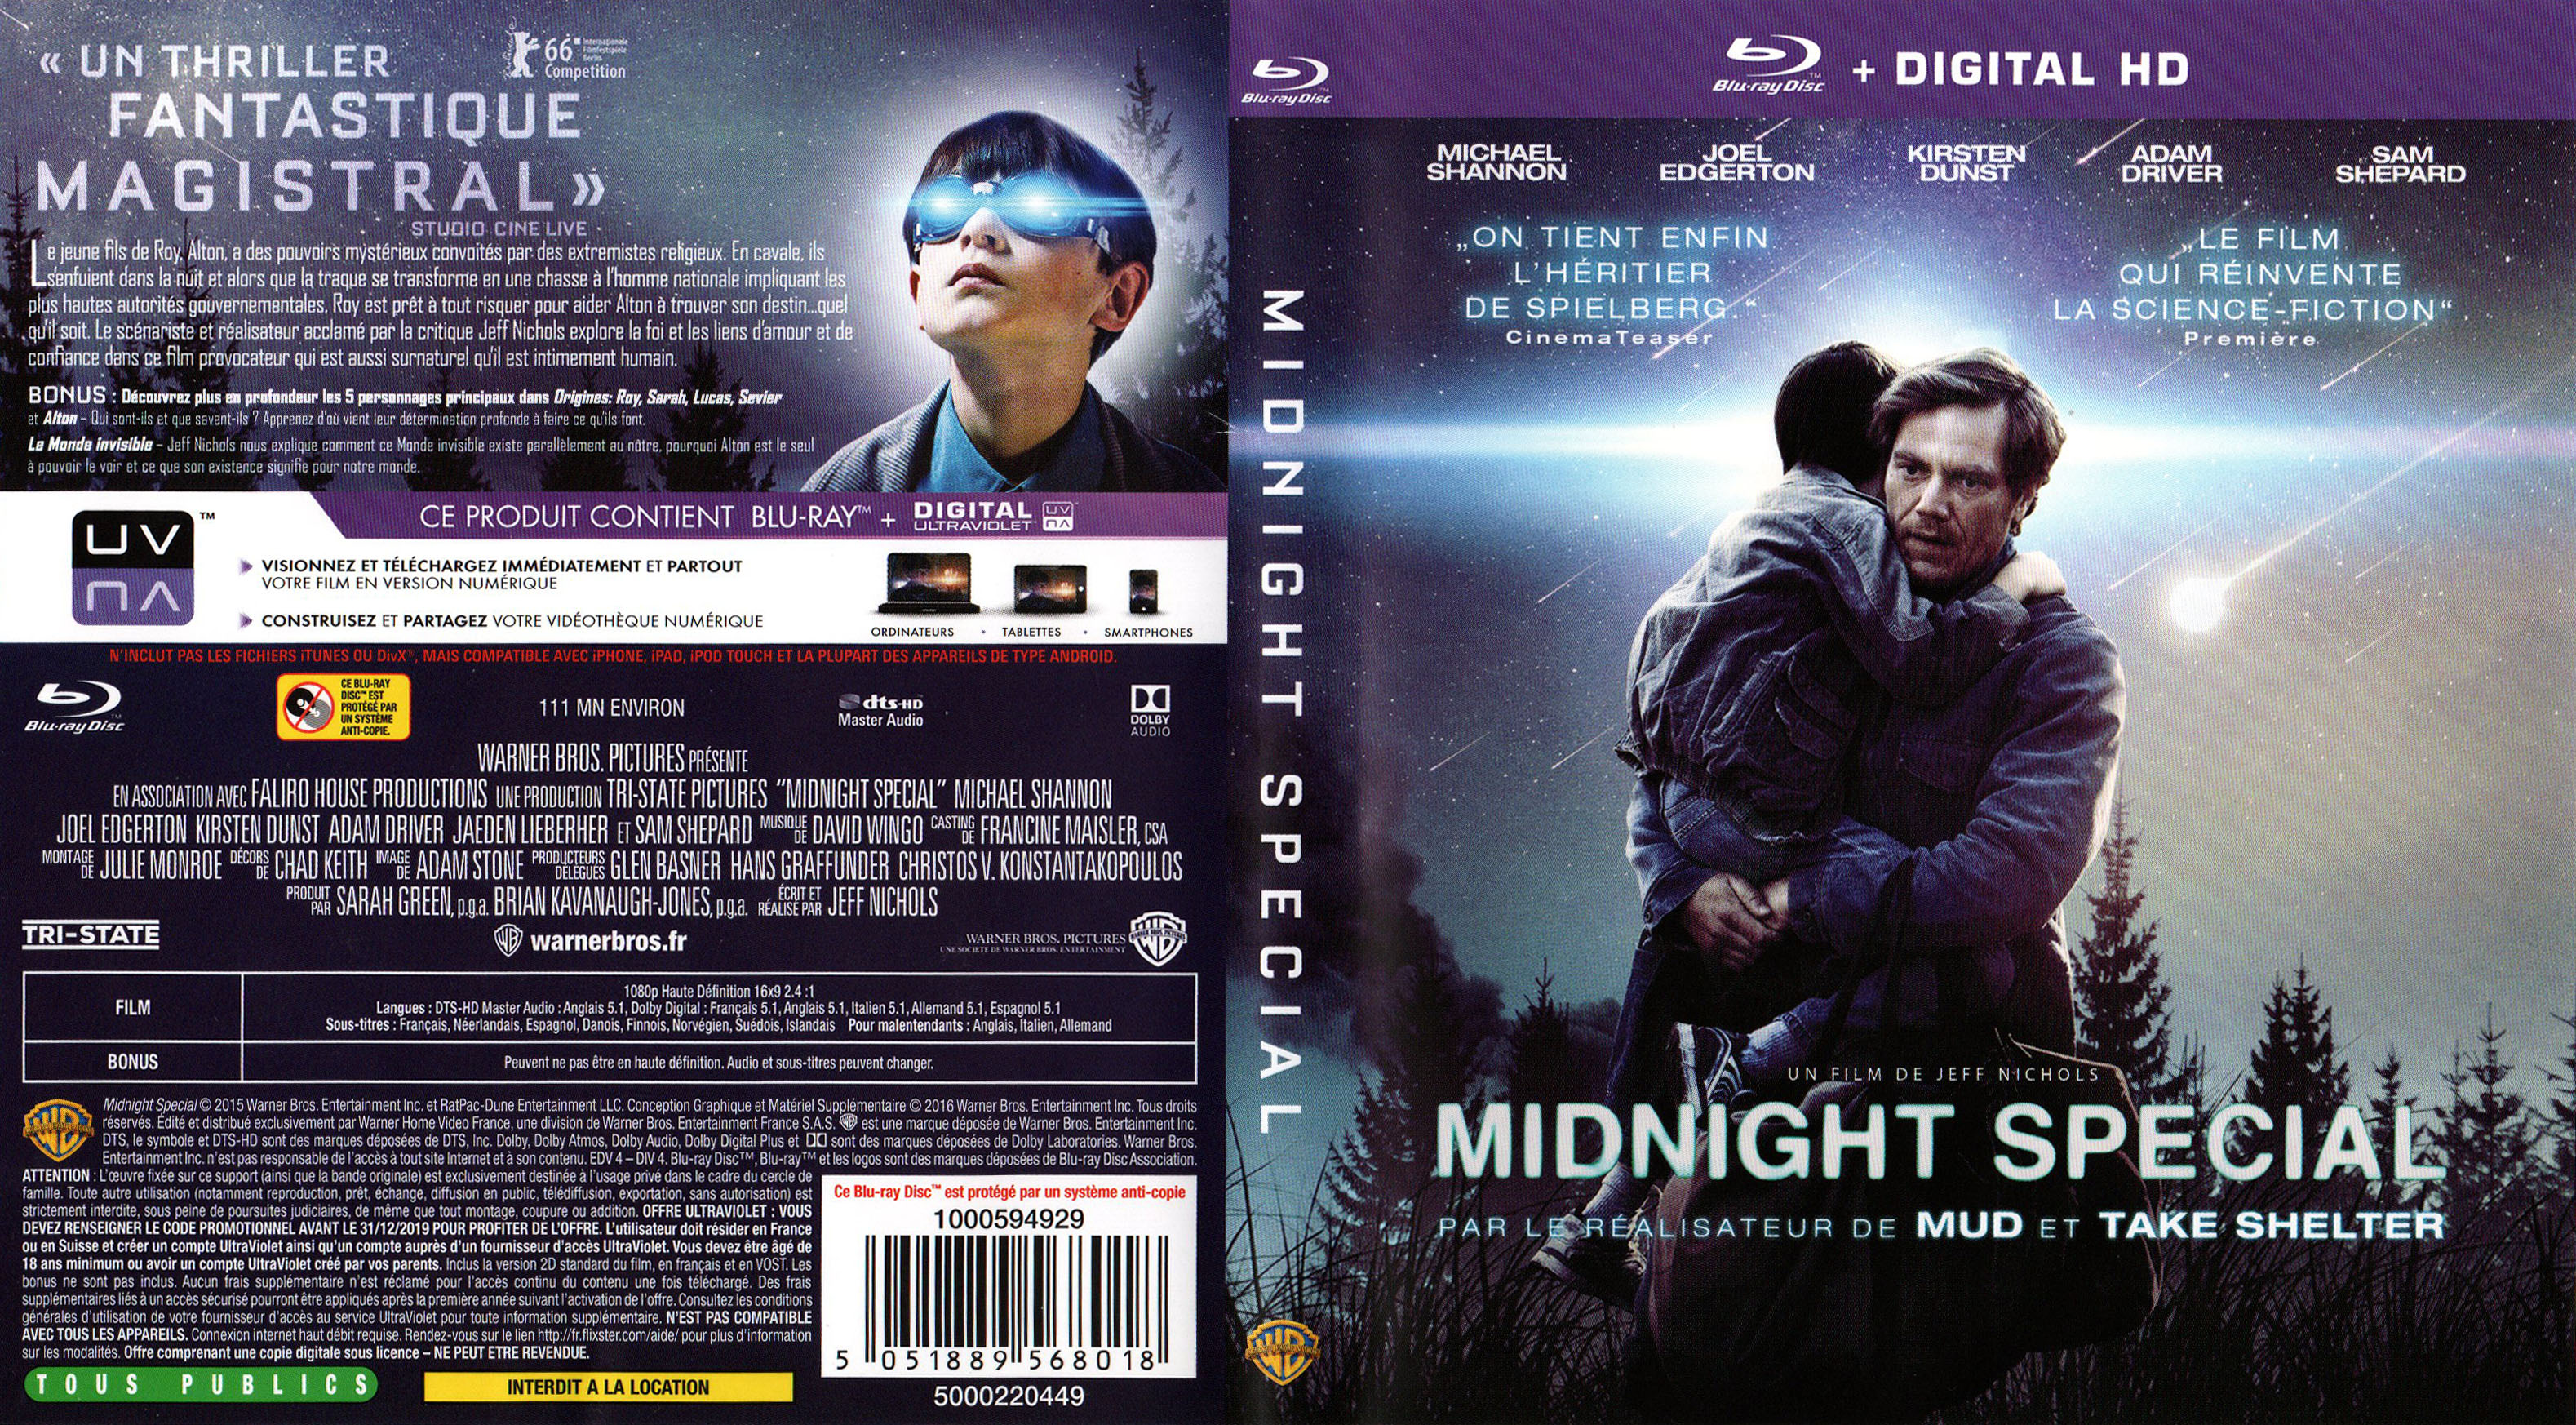 Jaquette DVD Midnight special (BLU-RAY) v2